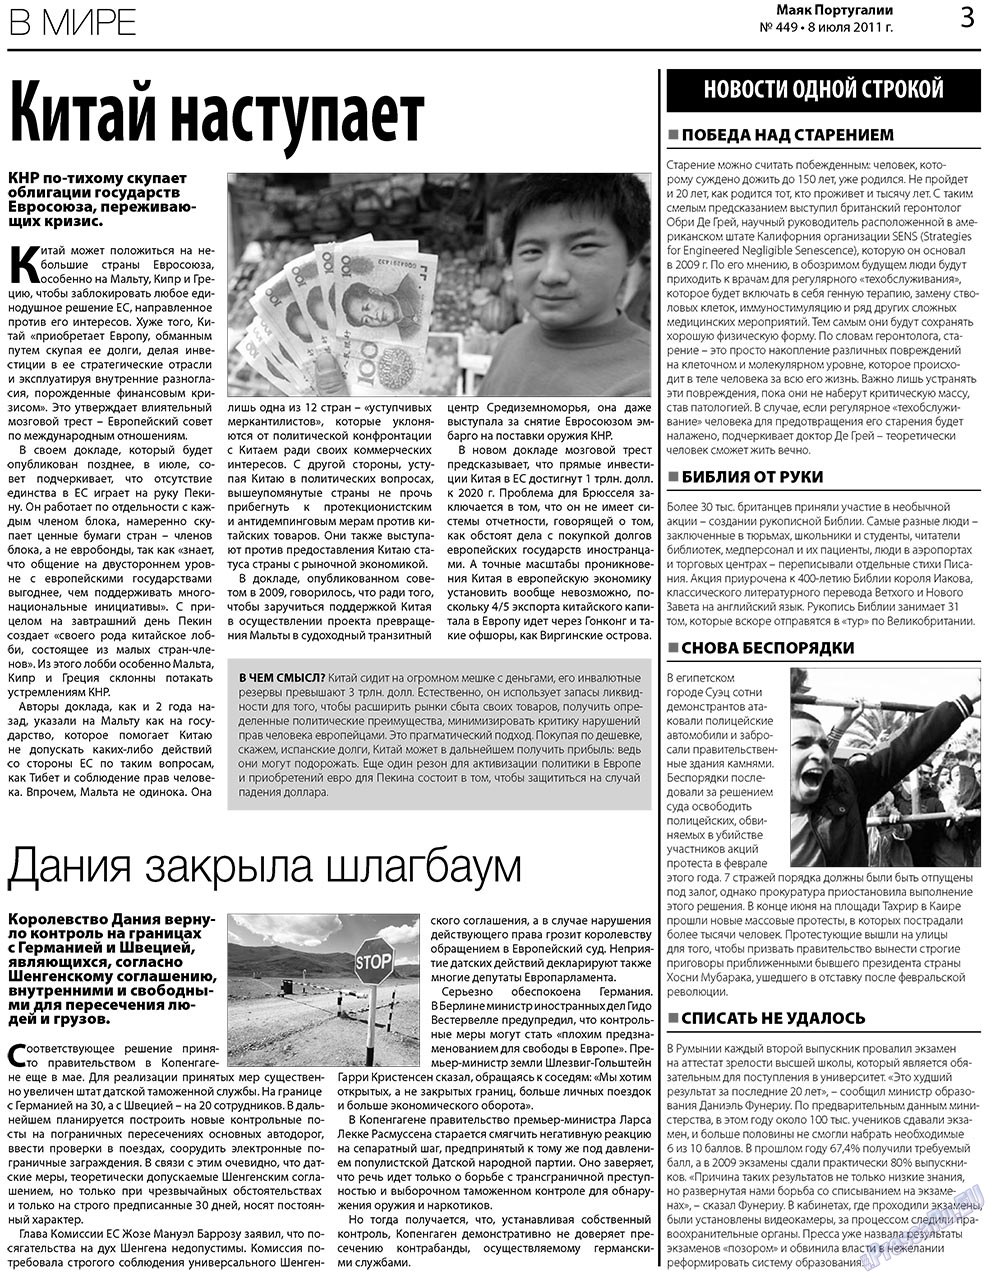 Маяк Португалии, газета. 2011 №449 стр.3